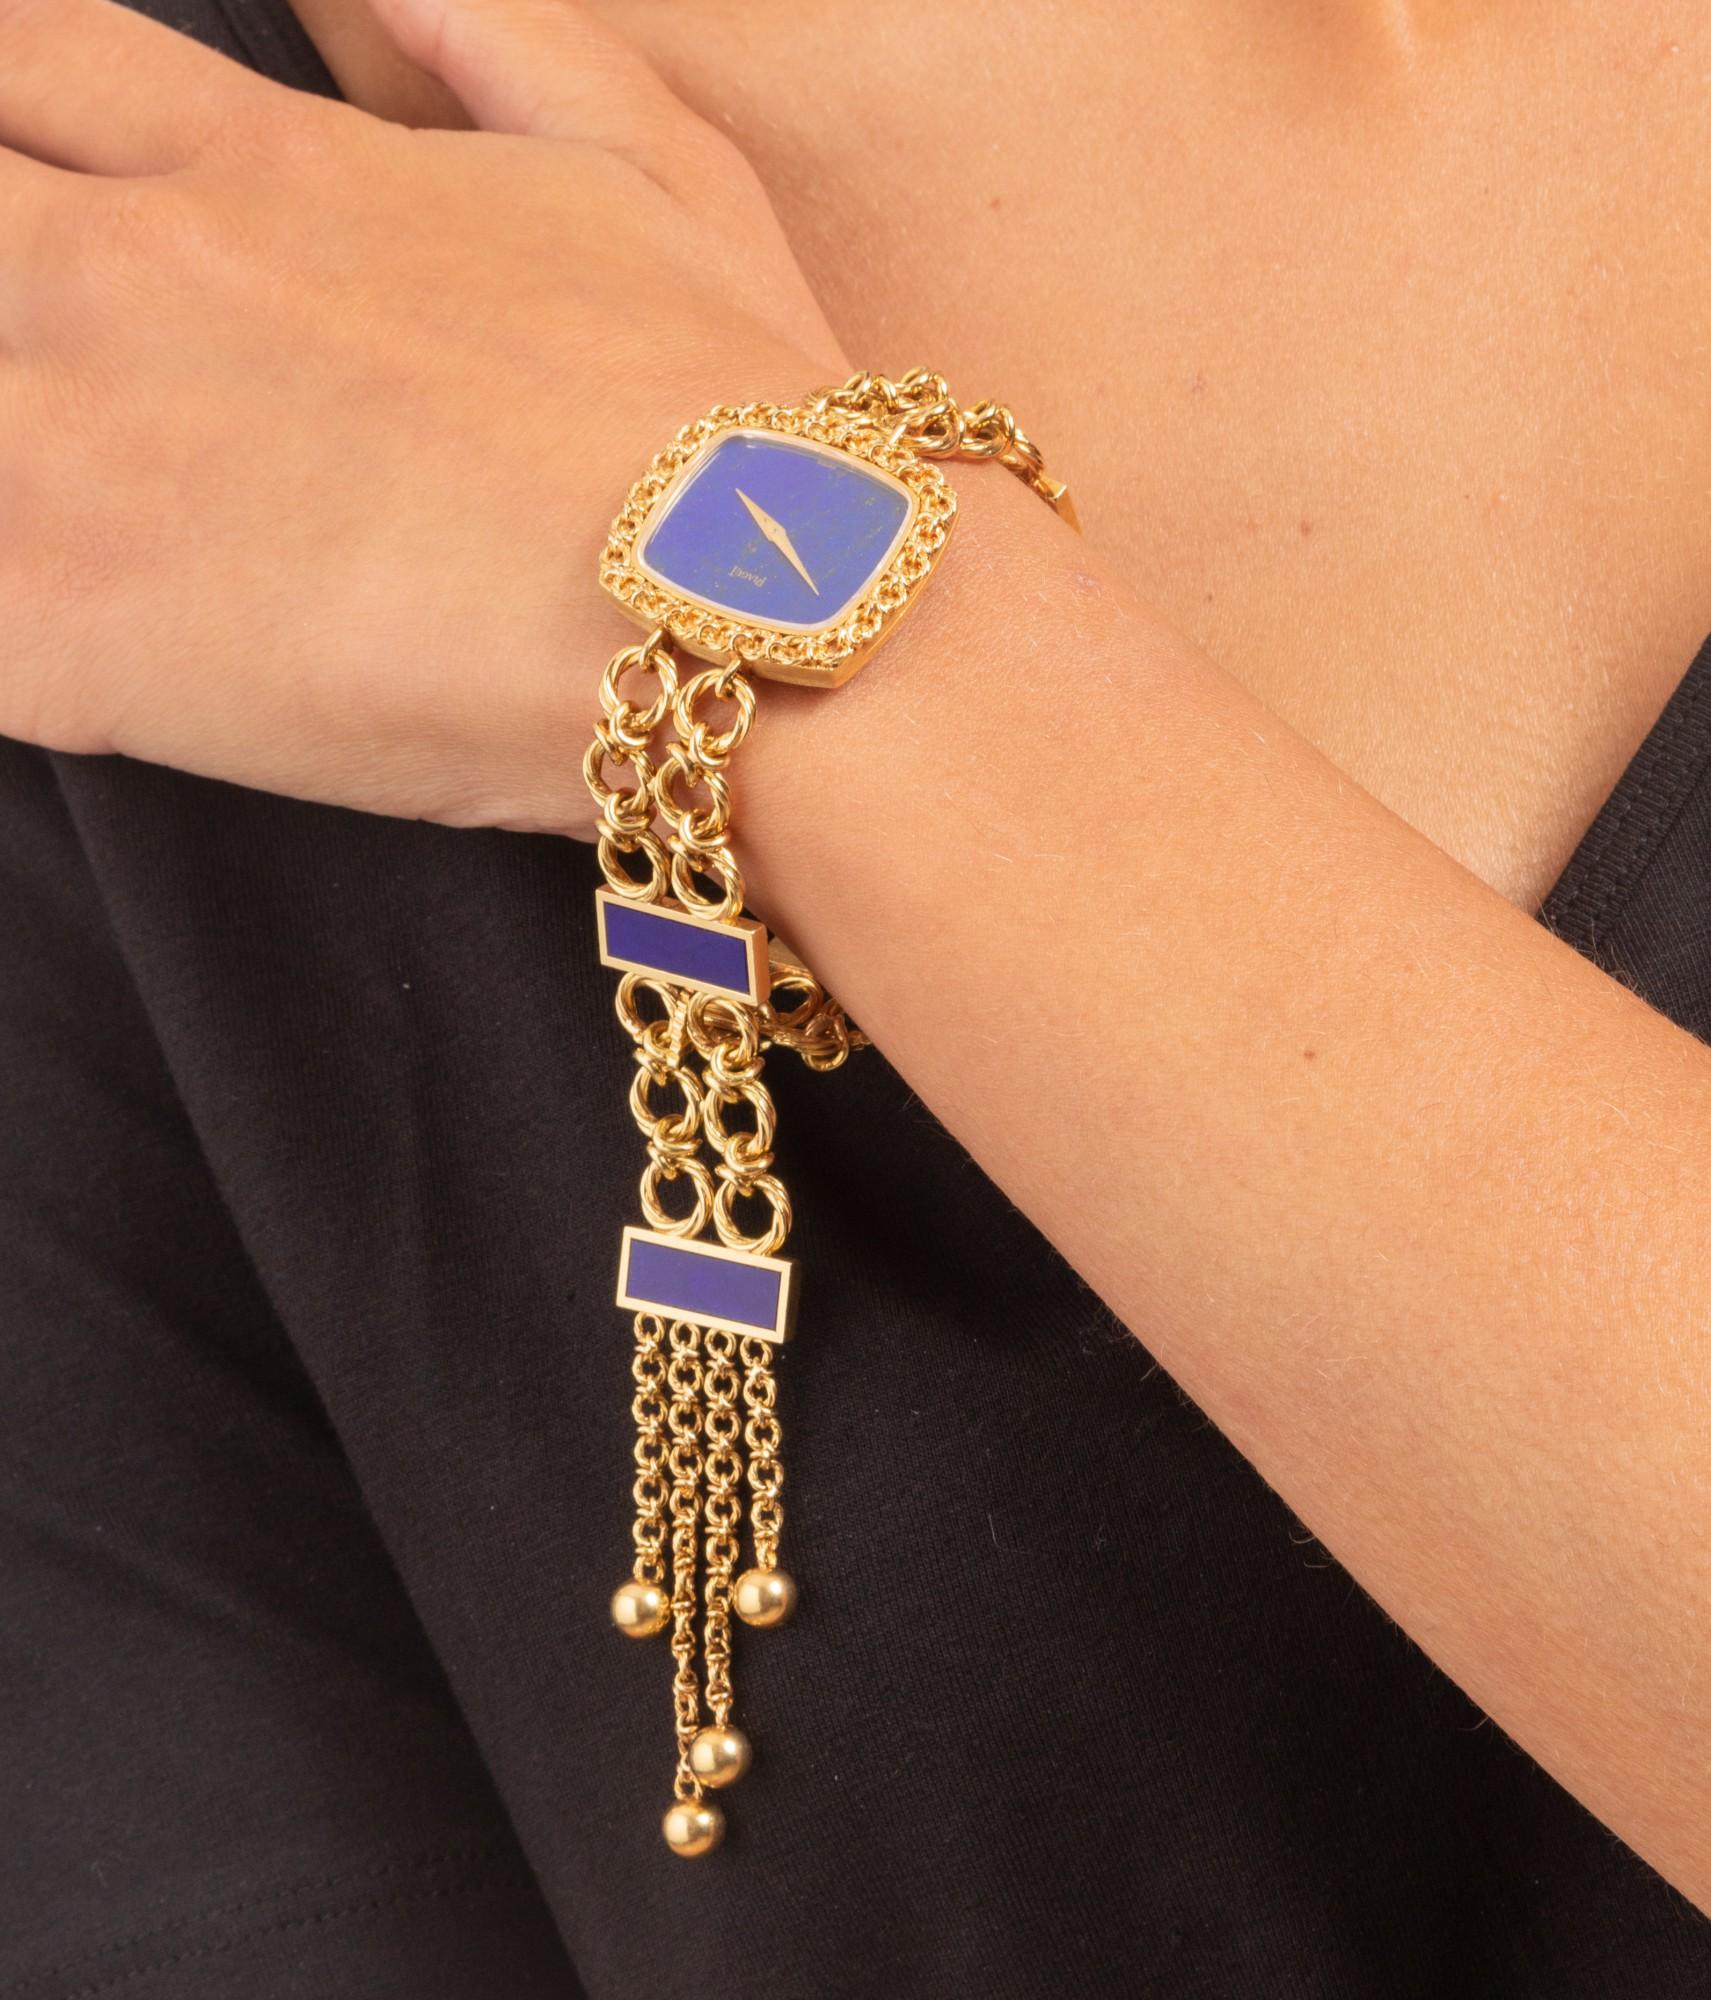 Modern Piaget Lady's Lapis Lazuli And 18K Yellow Gold Bracelet Watch